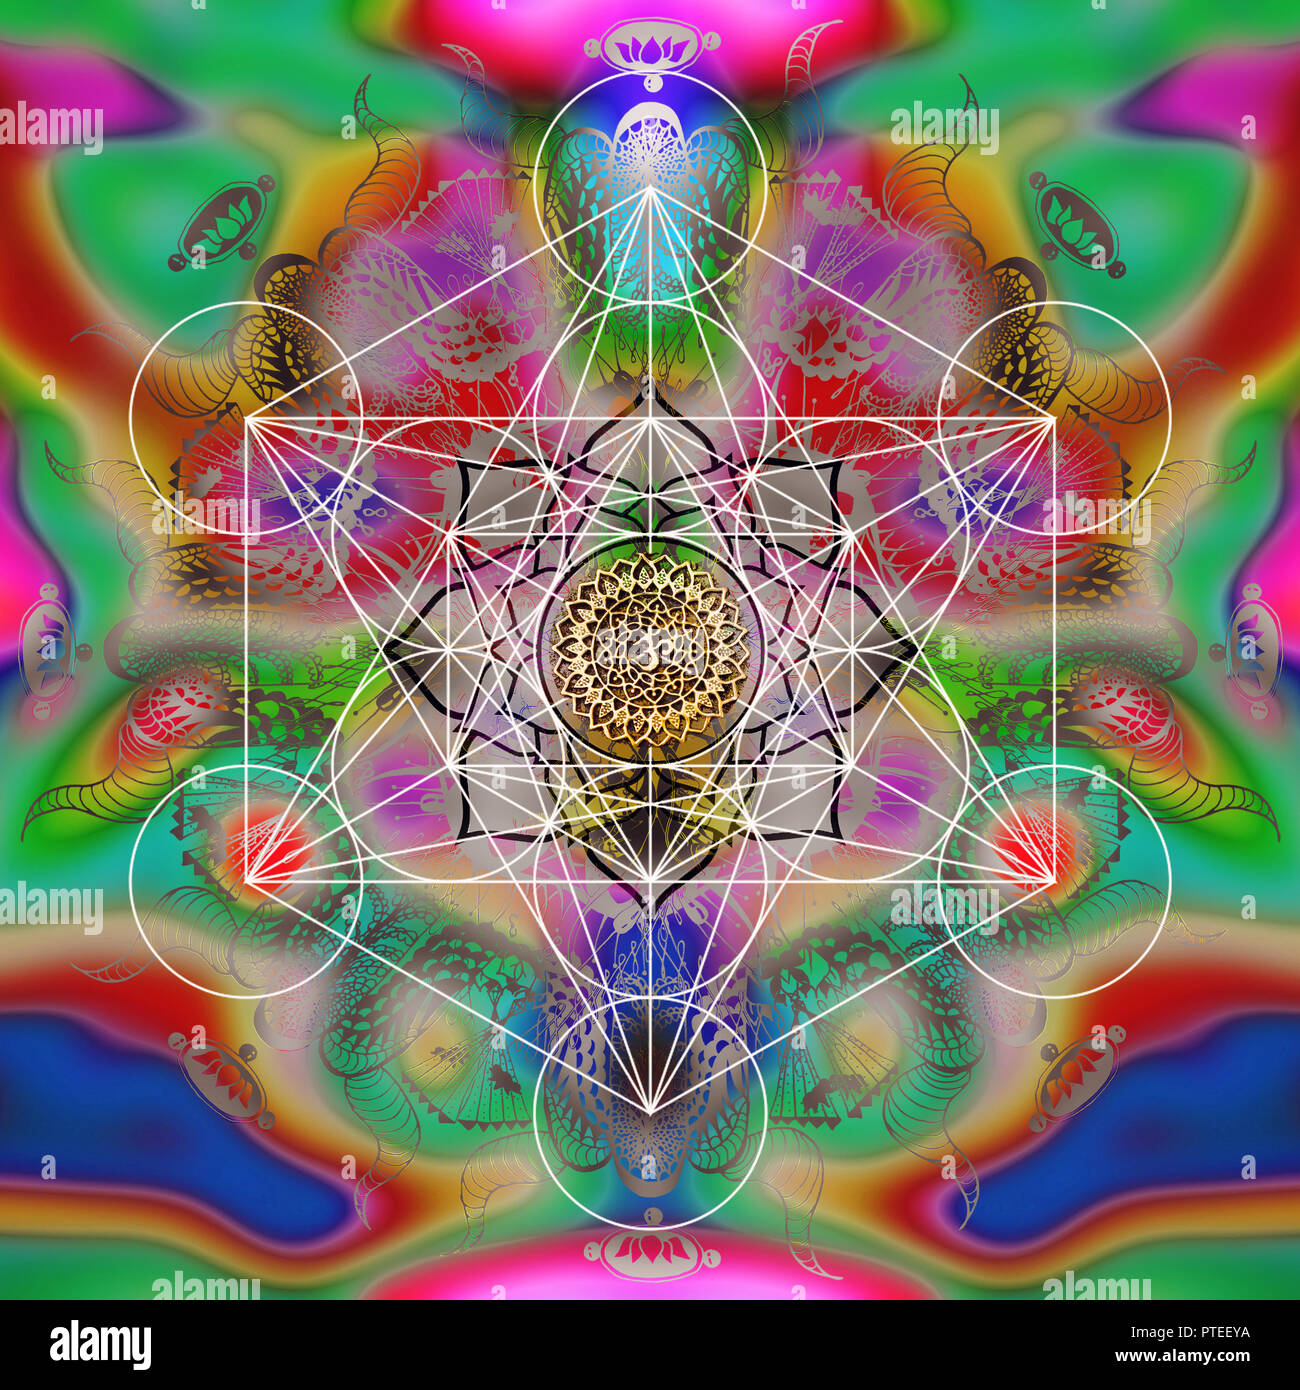 Metatron cube sacred geometry on colorful blury background Stock Photo